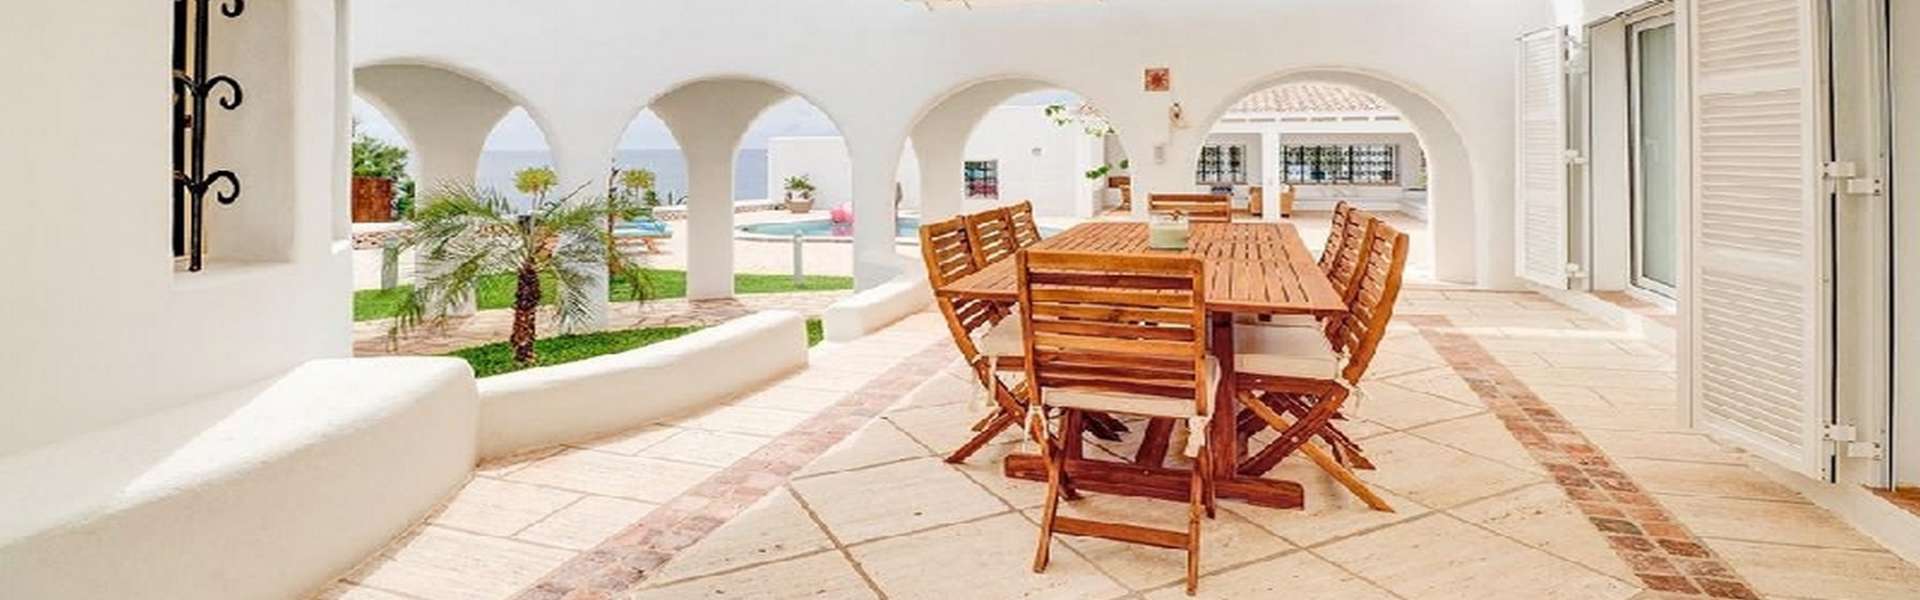 Attractive Ibiza style villa with sea view in Cala d'Or